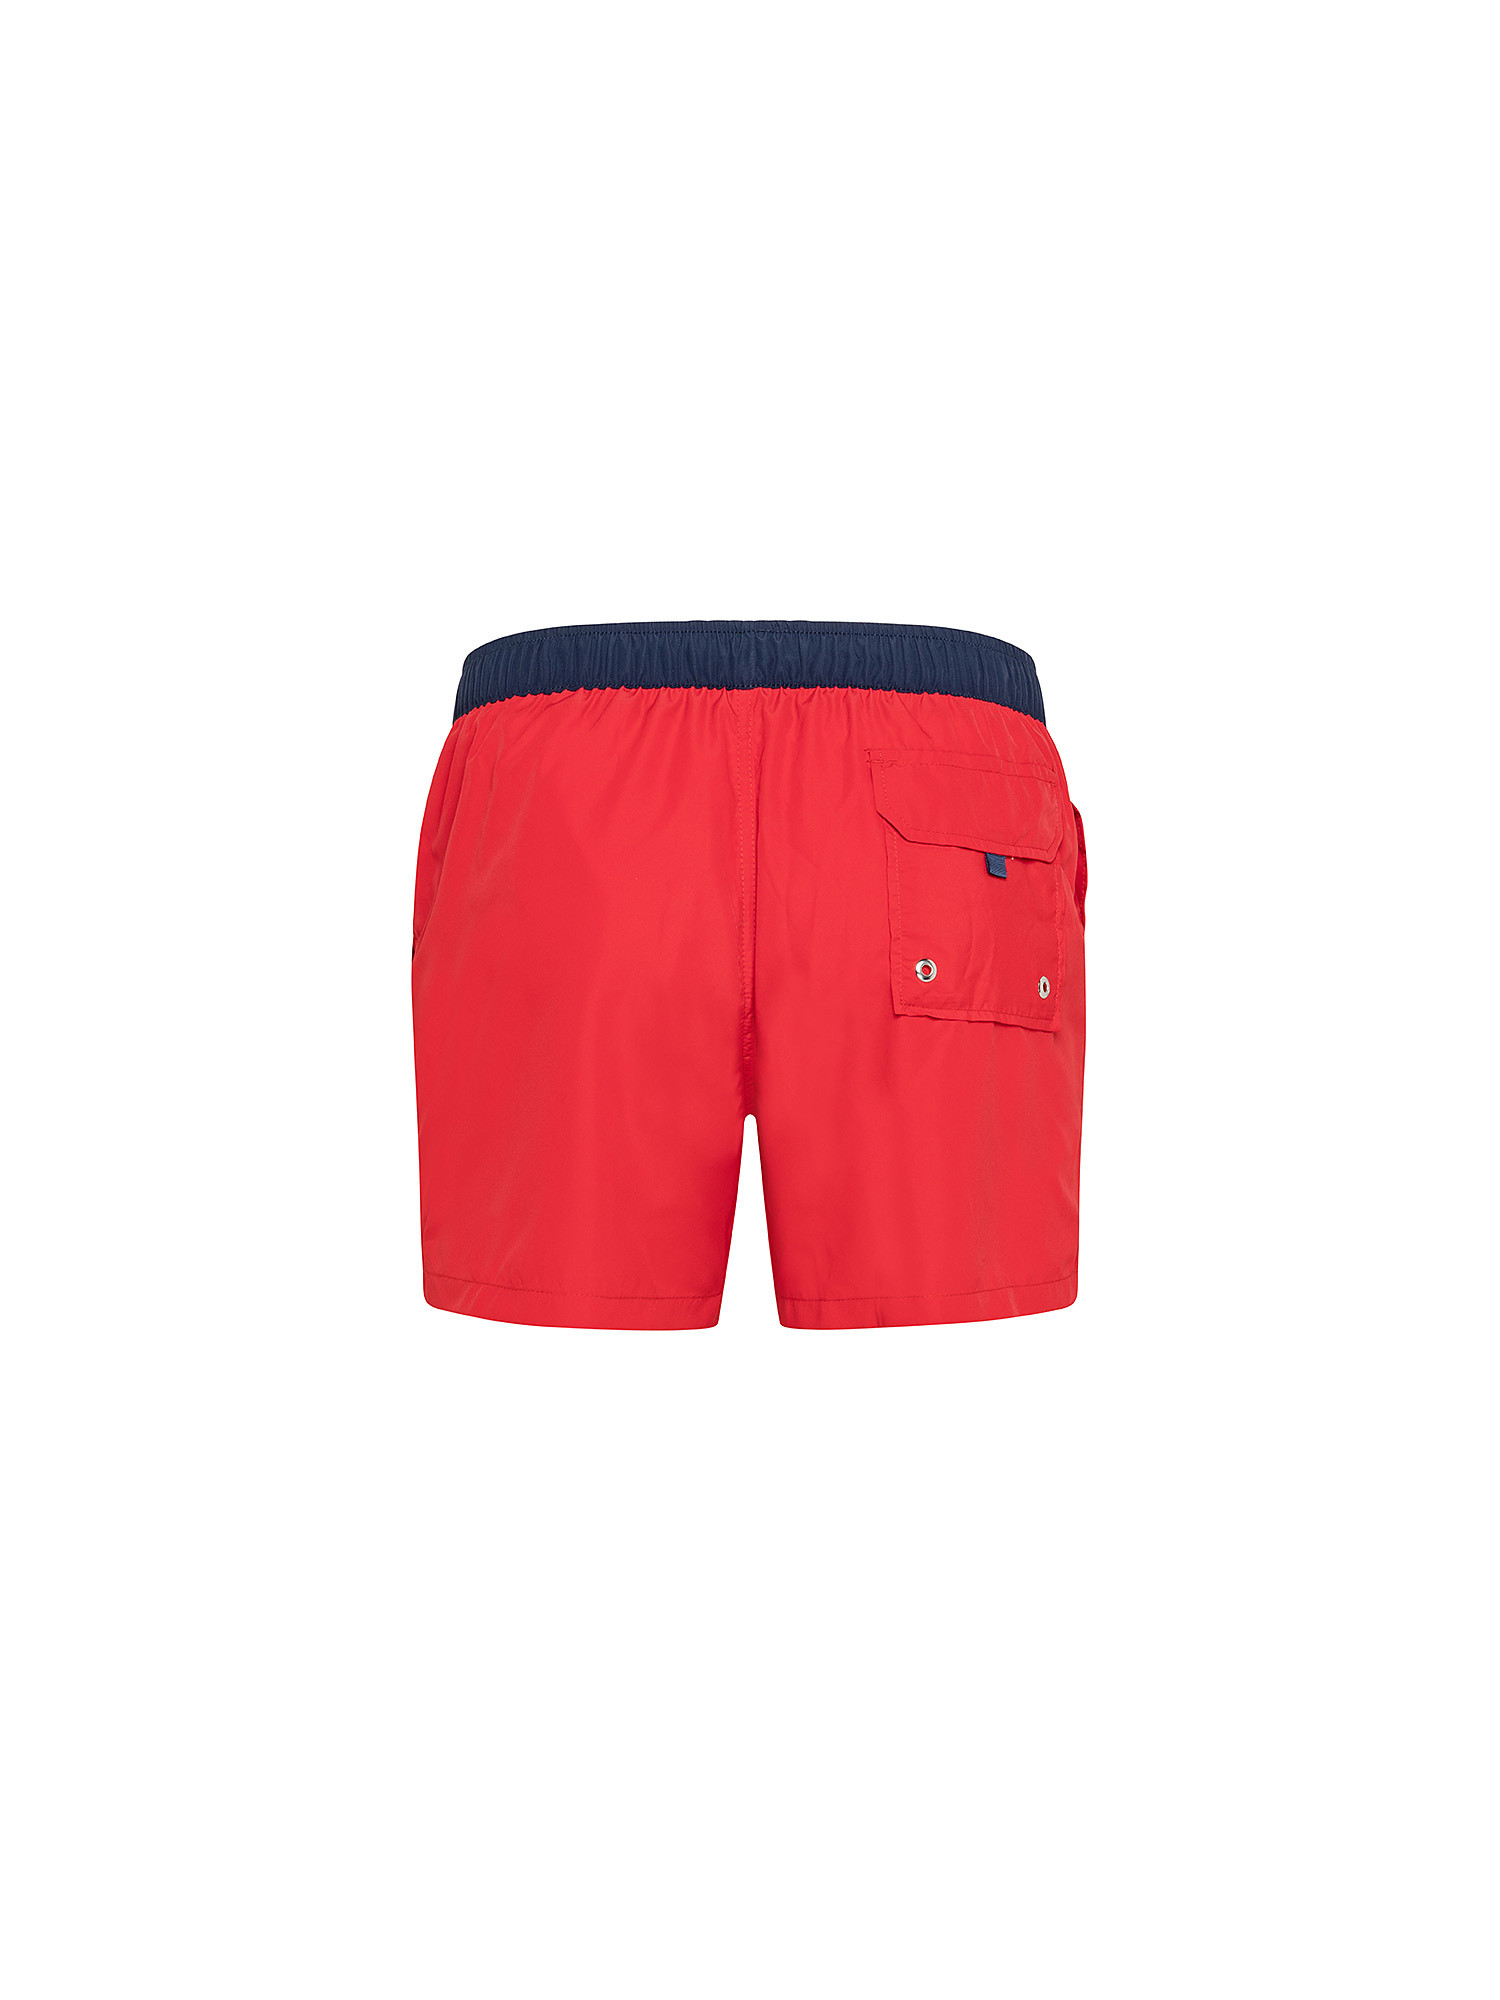 Nylon swim shorts with regular fit drawstring, Red, large image number 1